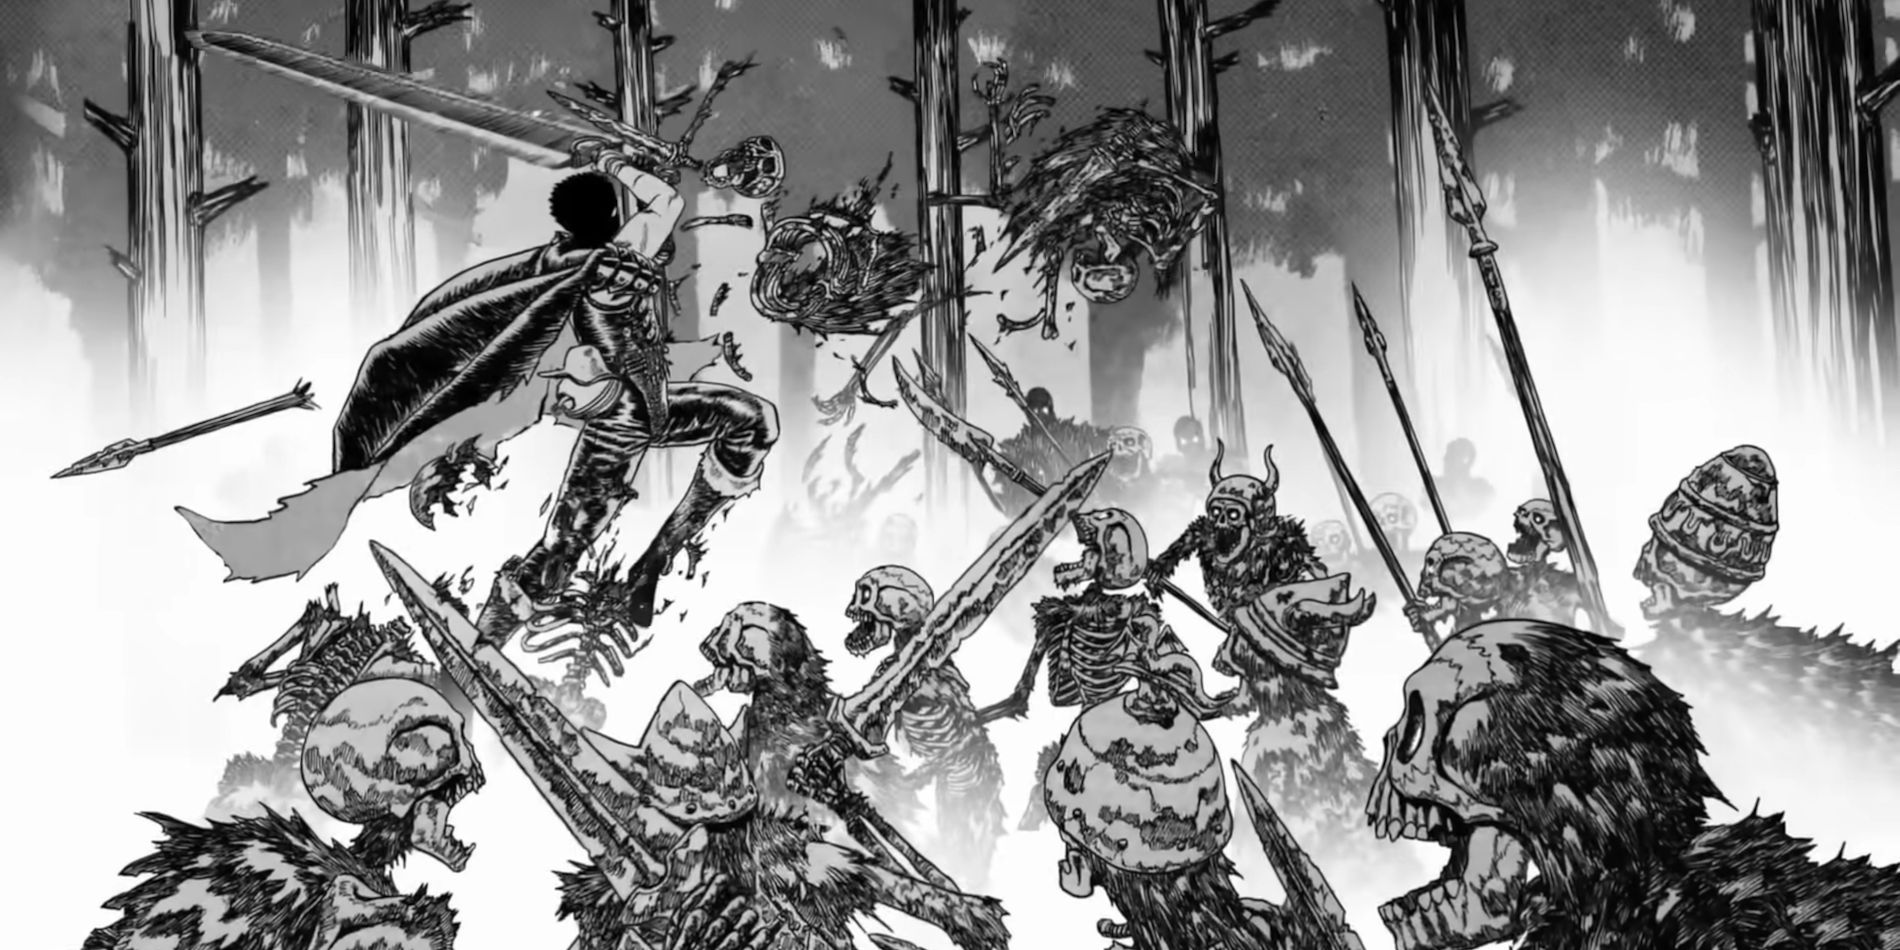 Berserk Fan Motion Comic Studio Taka Guts against the skeletons